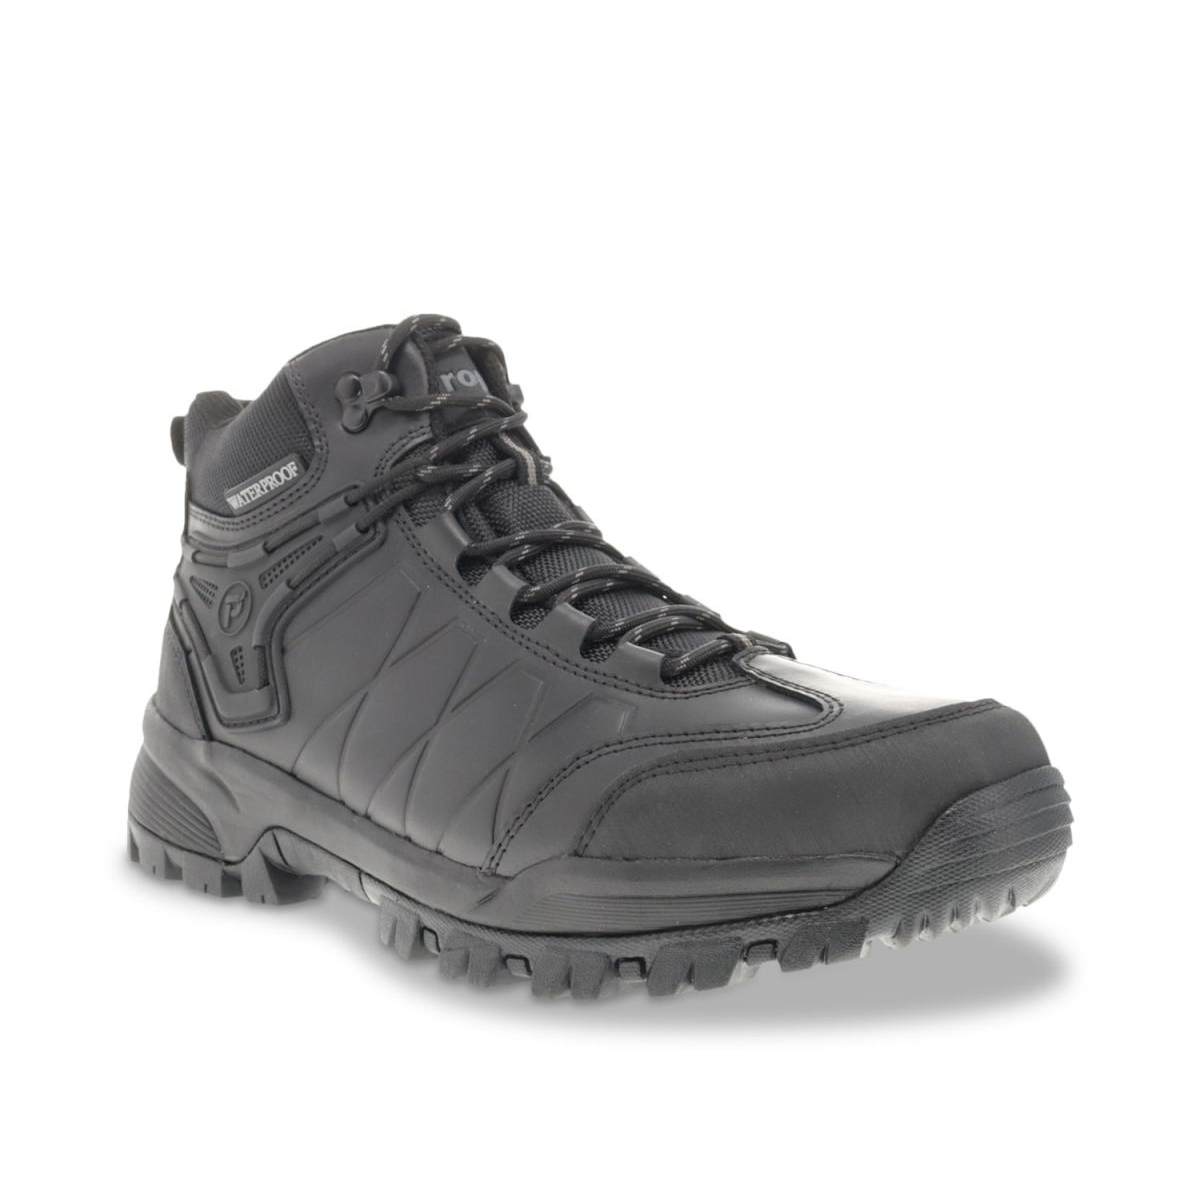 Propet Men's Ridge Walker Force Hiking Boots Black - MBA052LBLK BLACK - BLACK, 9.5 XX-Wide